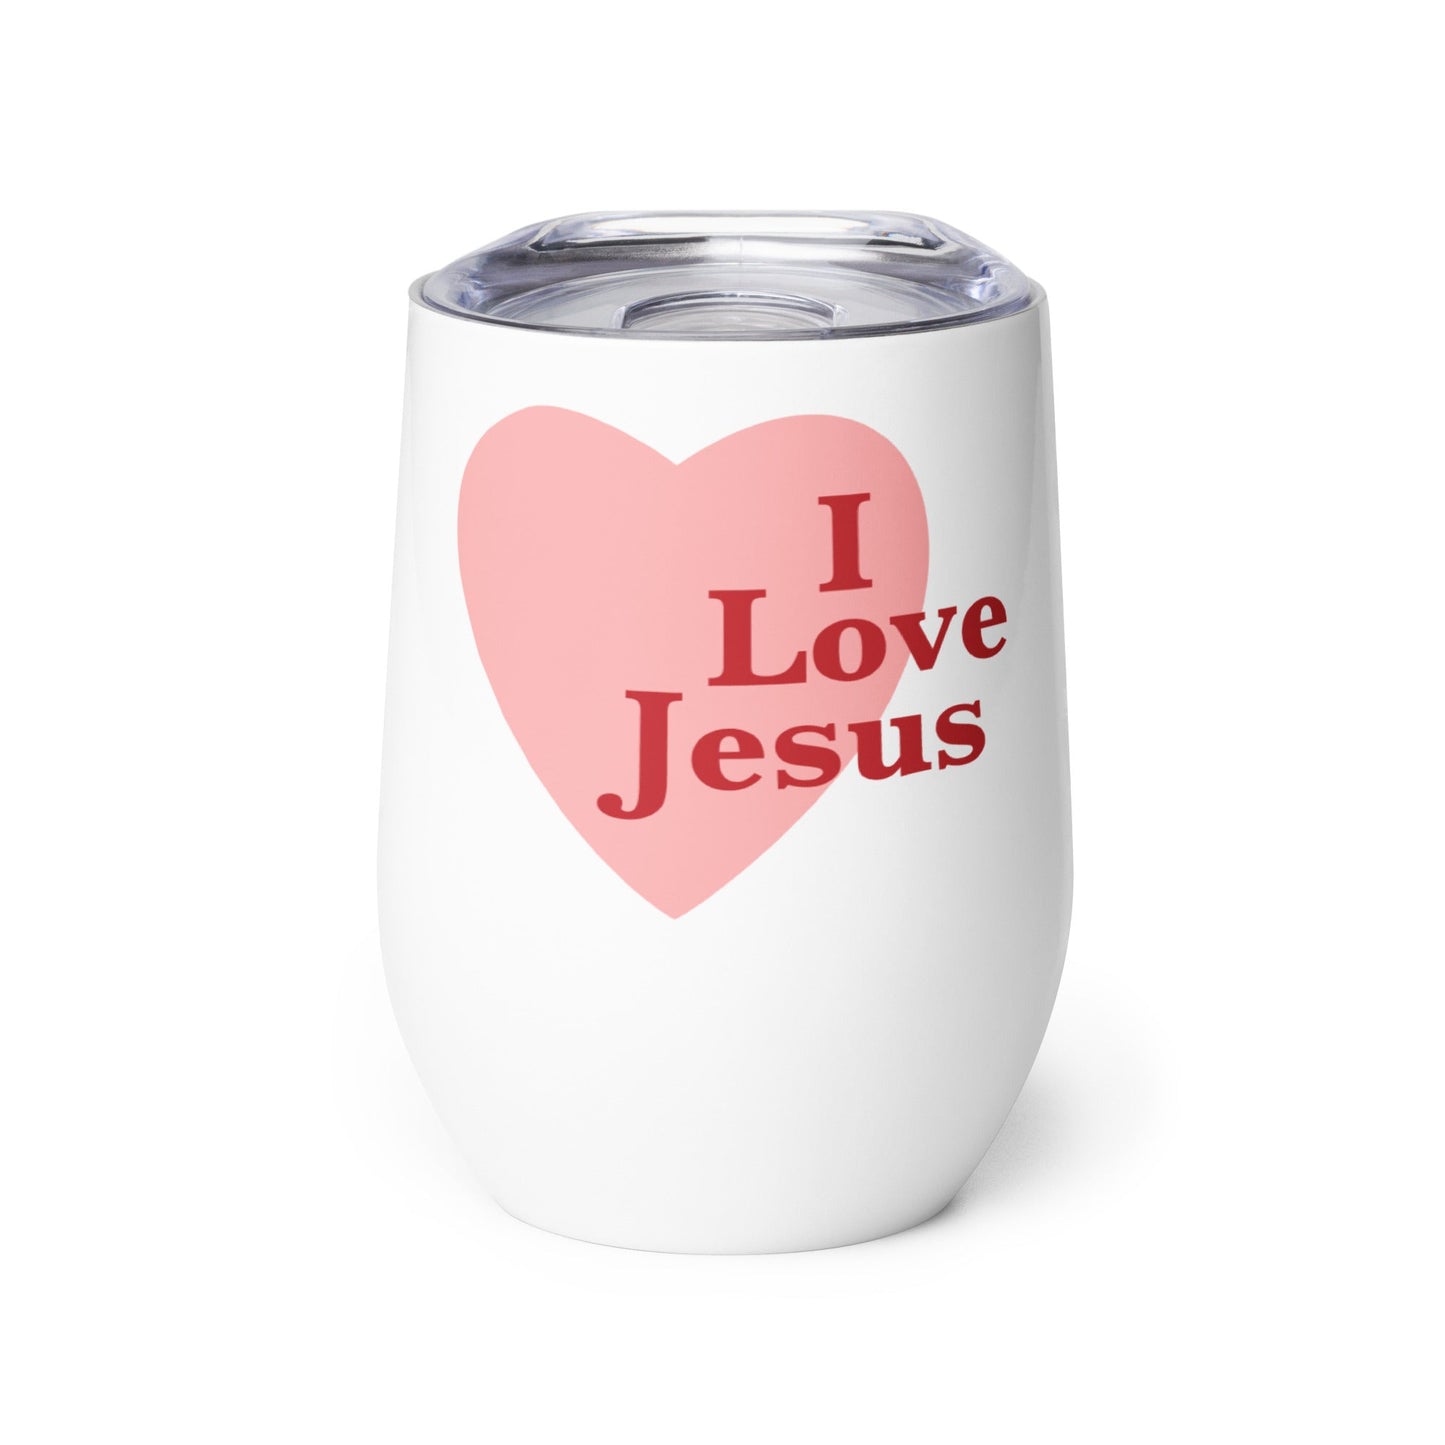 I Love Jesus - Wine tumbler - White - Creation Awaits